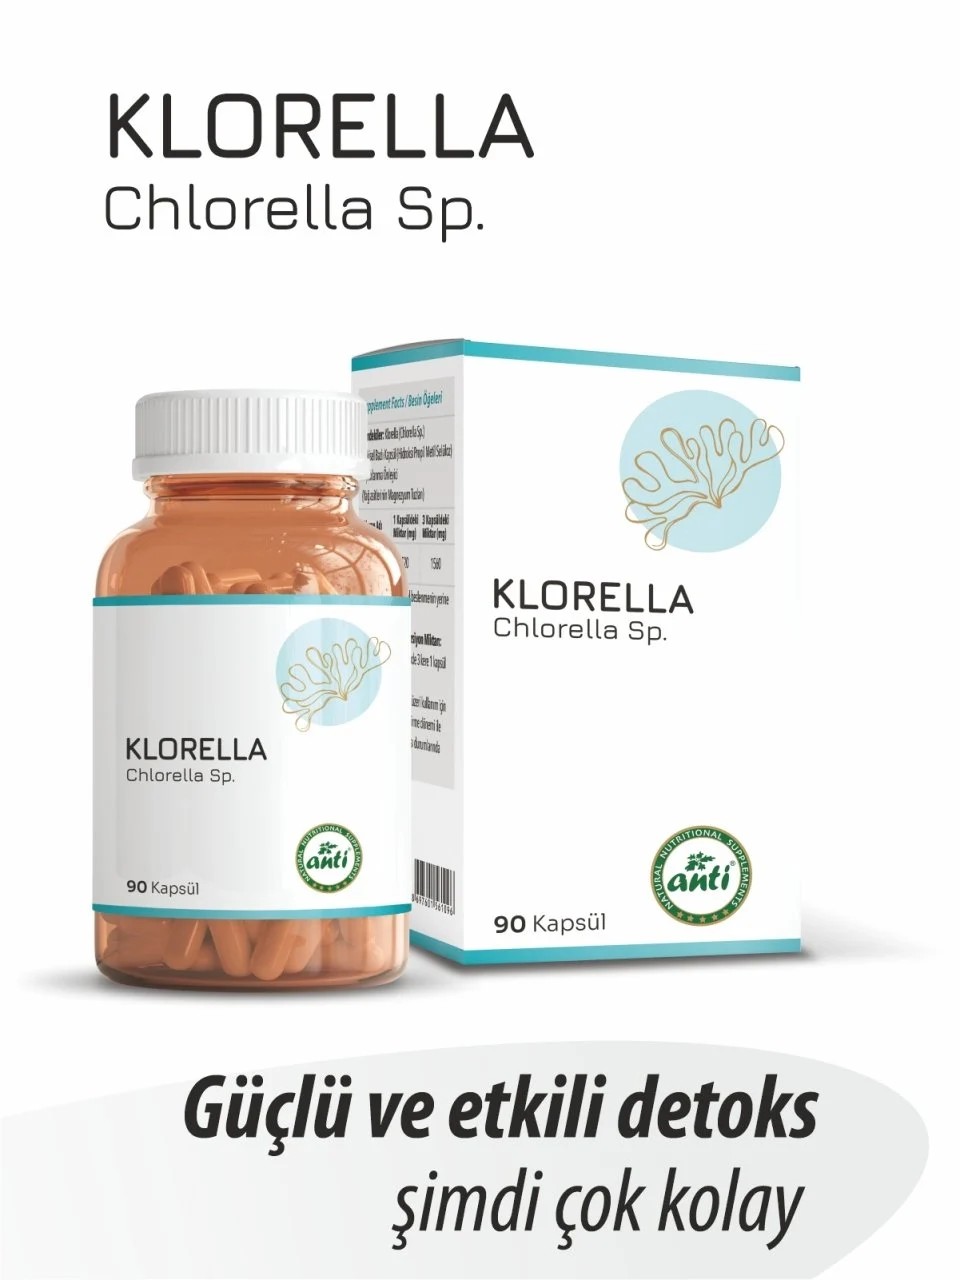 Klorella